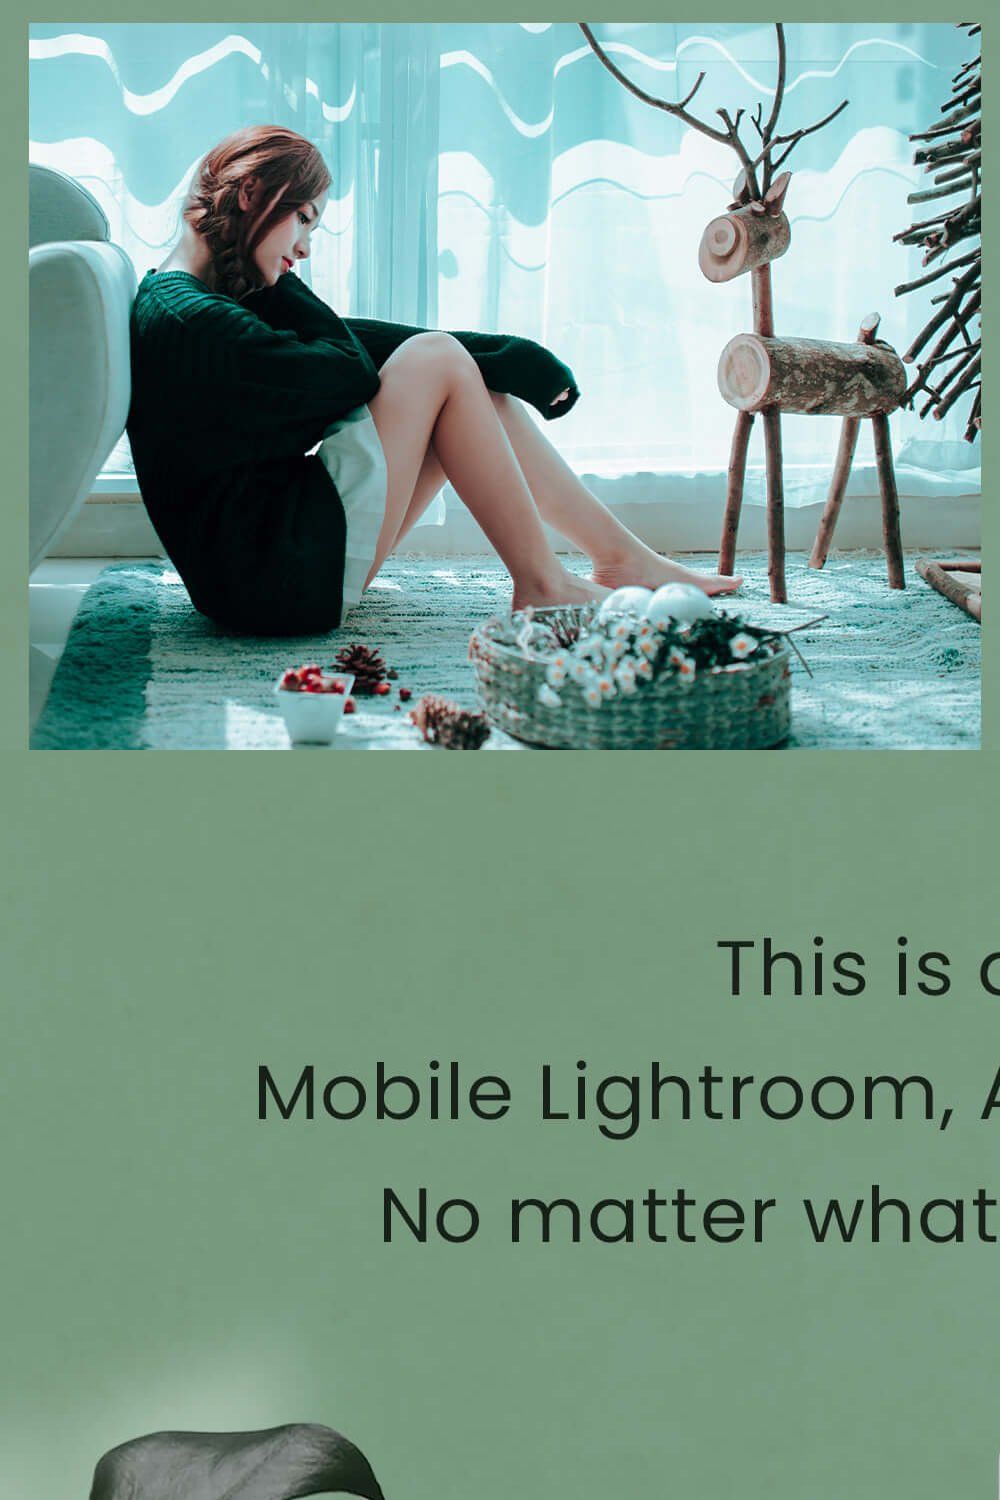 Mistletoe Lightroom Photoshop LUTs pinterest preview image.